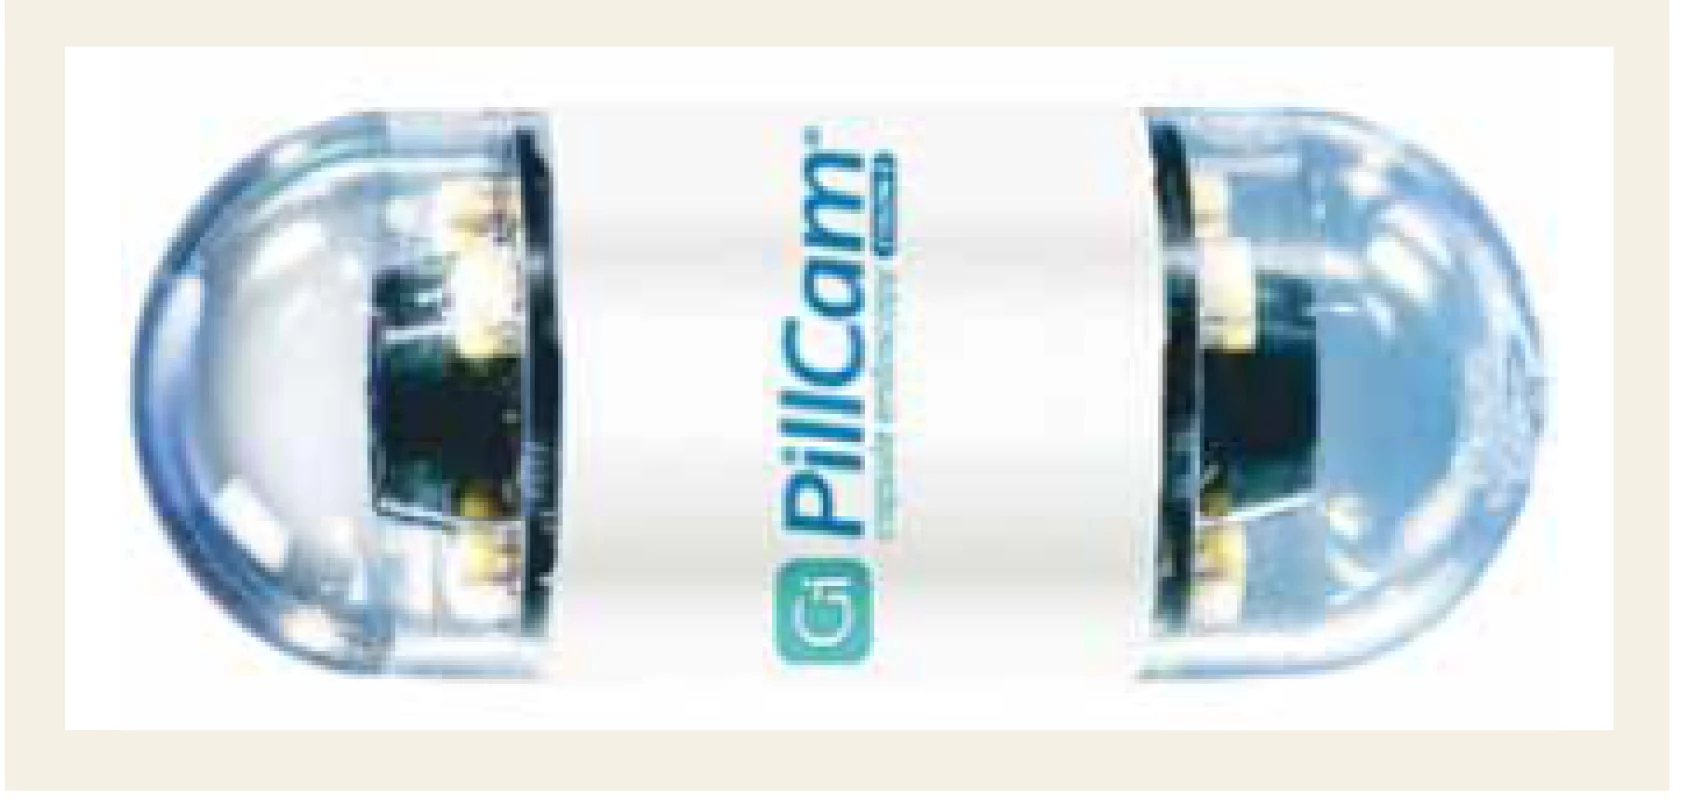 Kolonické kapsle PillCam
COLON 2.<br>
Fig. 1. PillCam COLON 2 colon capsule.